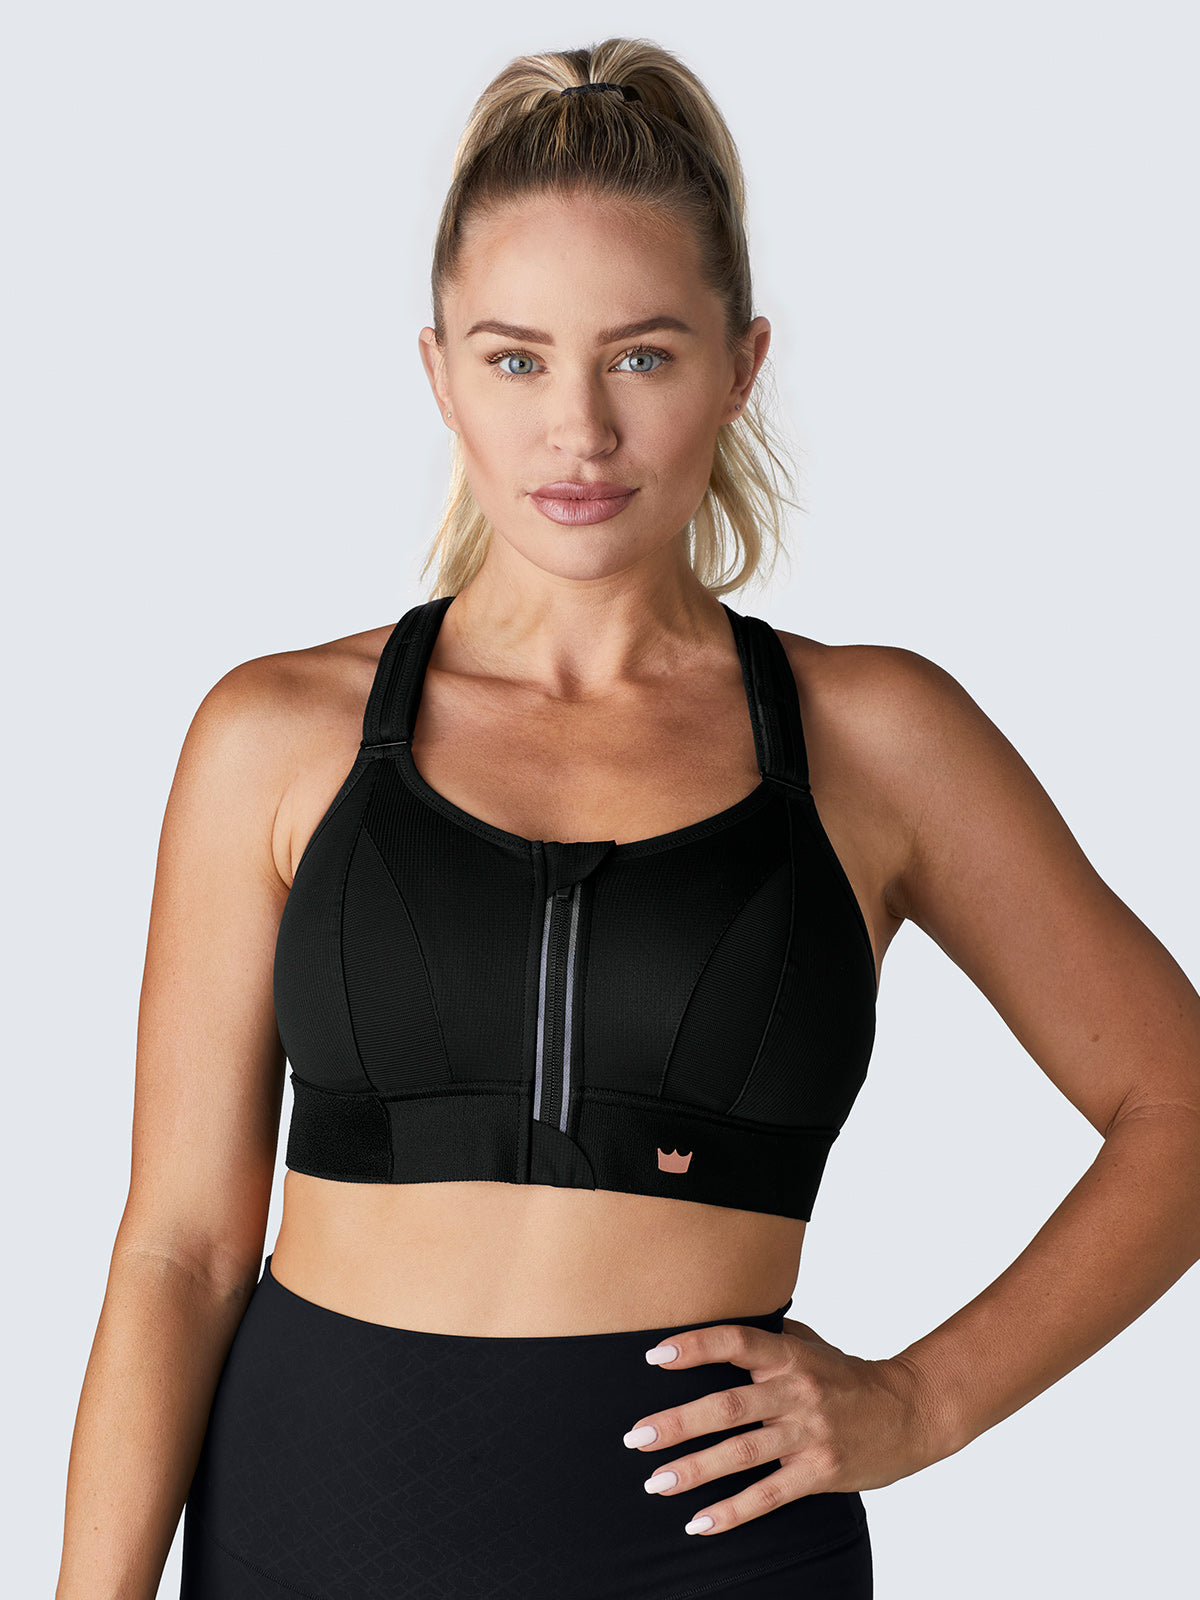 SZXZYGS Underoutfit Bras for Women Women's Halter Sports Bra Yoga Bralette  Crop Bras Top